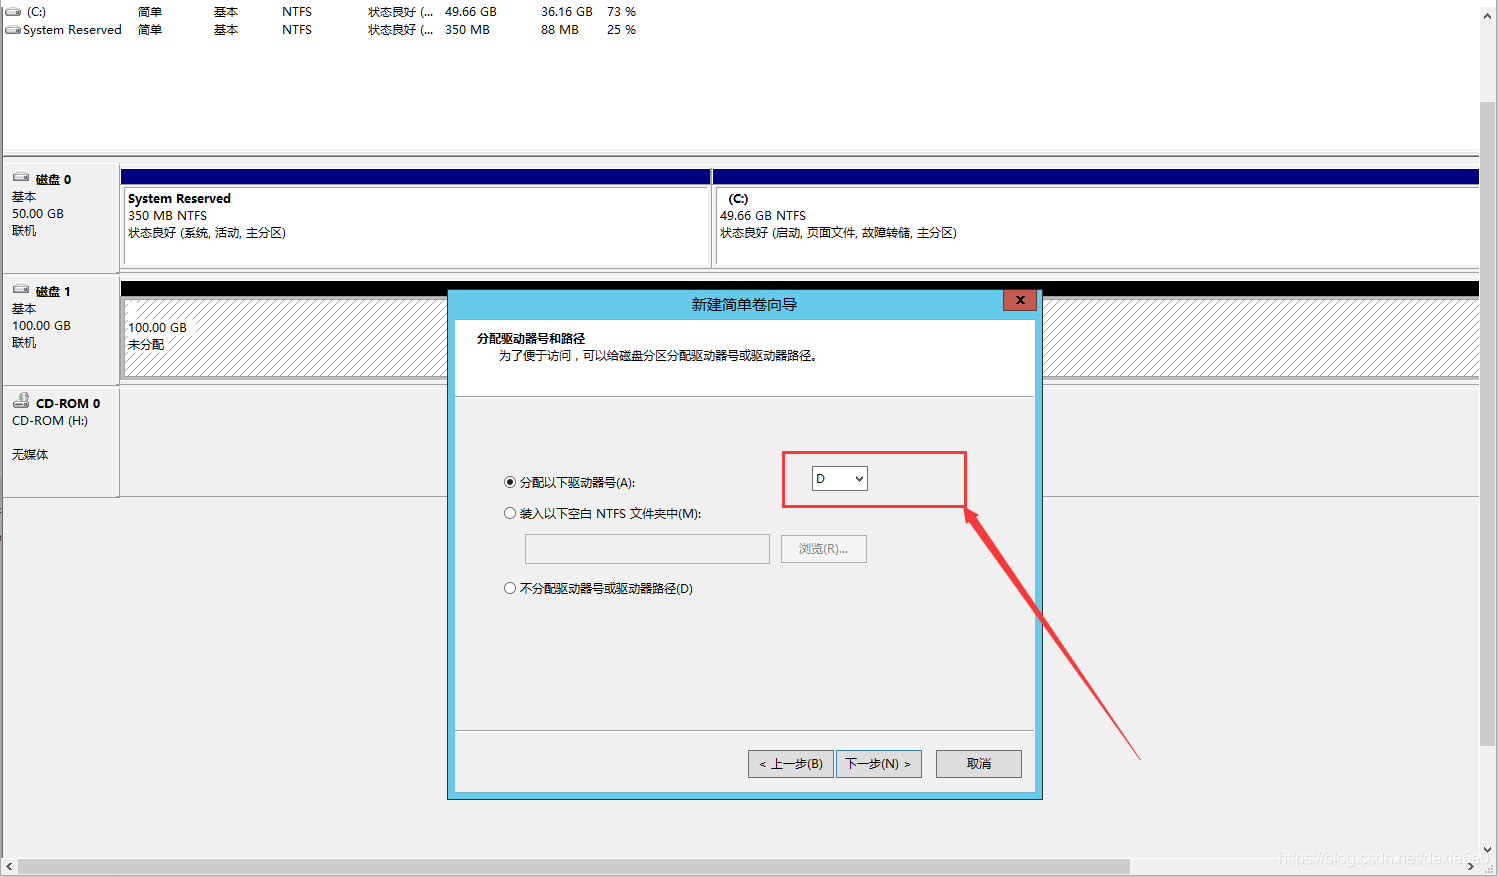 Windows server 2012 添加盘符为D盘的数据盘